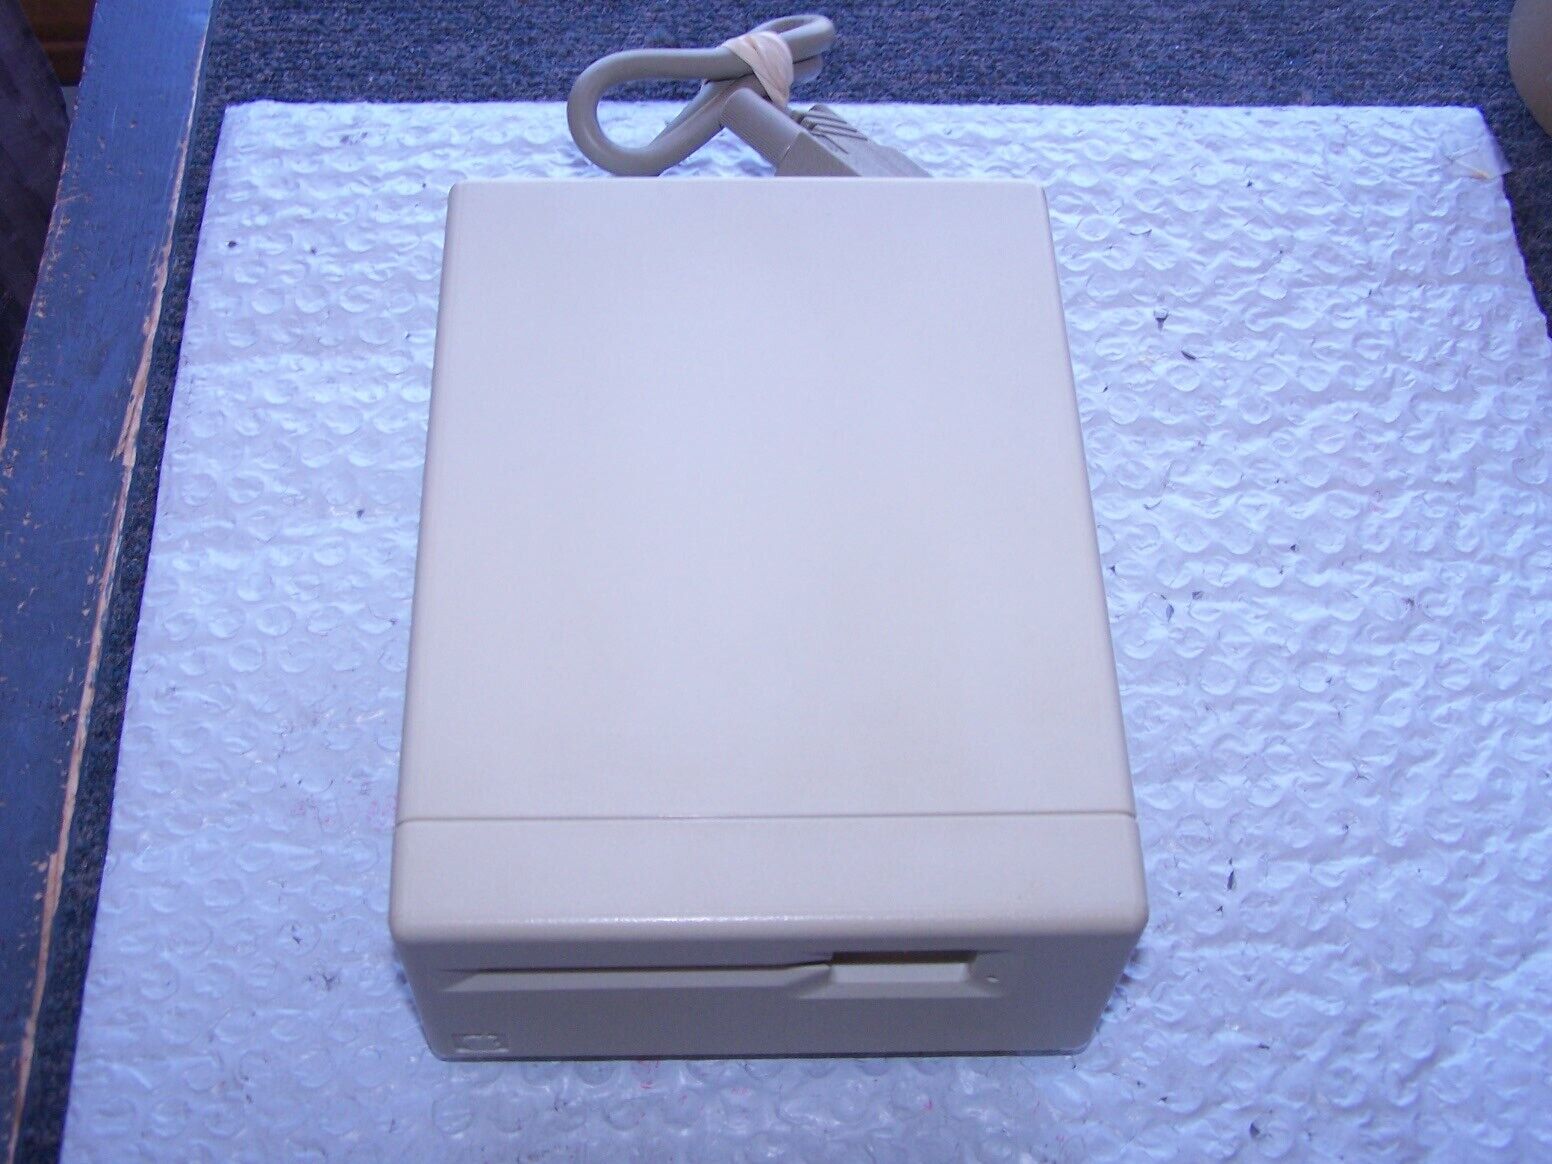 Apple Macintosh M0130 External 400k Floppy Disk Drive for vintage Mac 128K, 512K